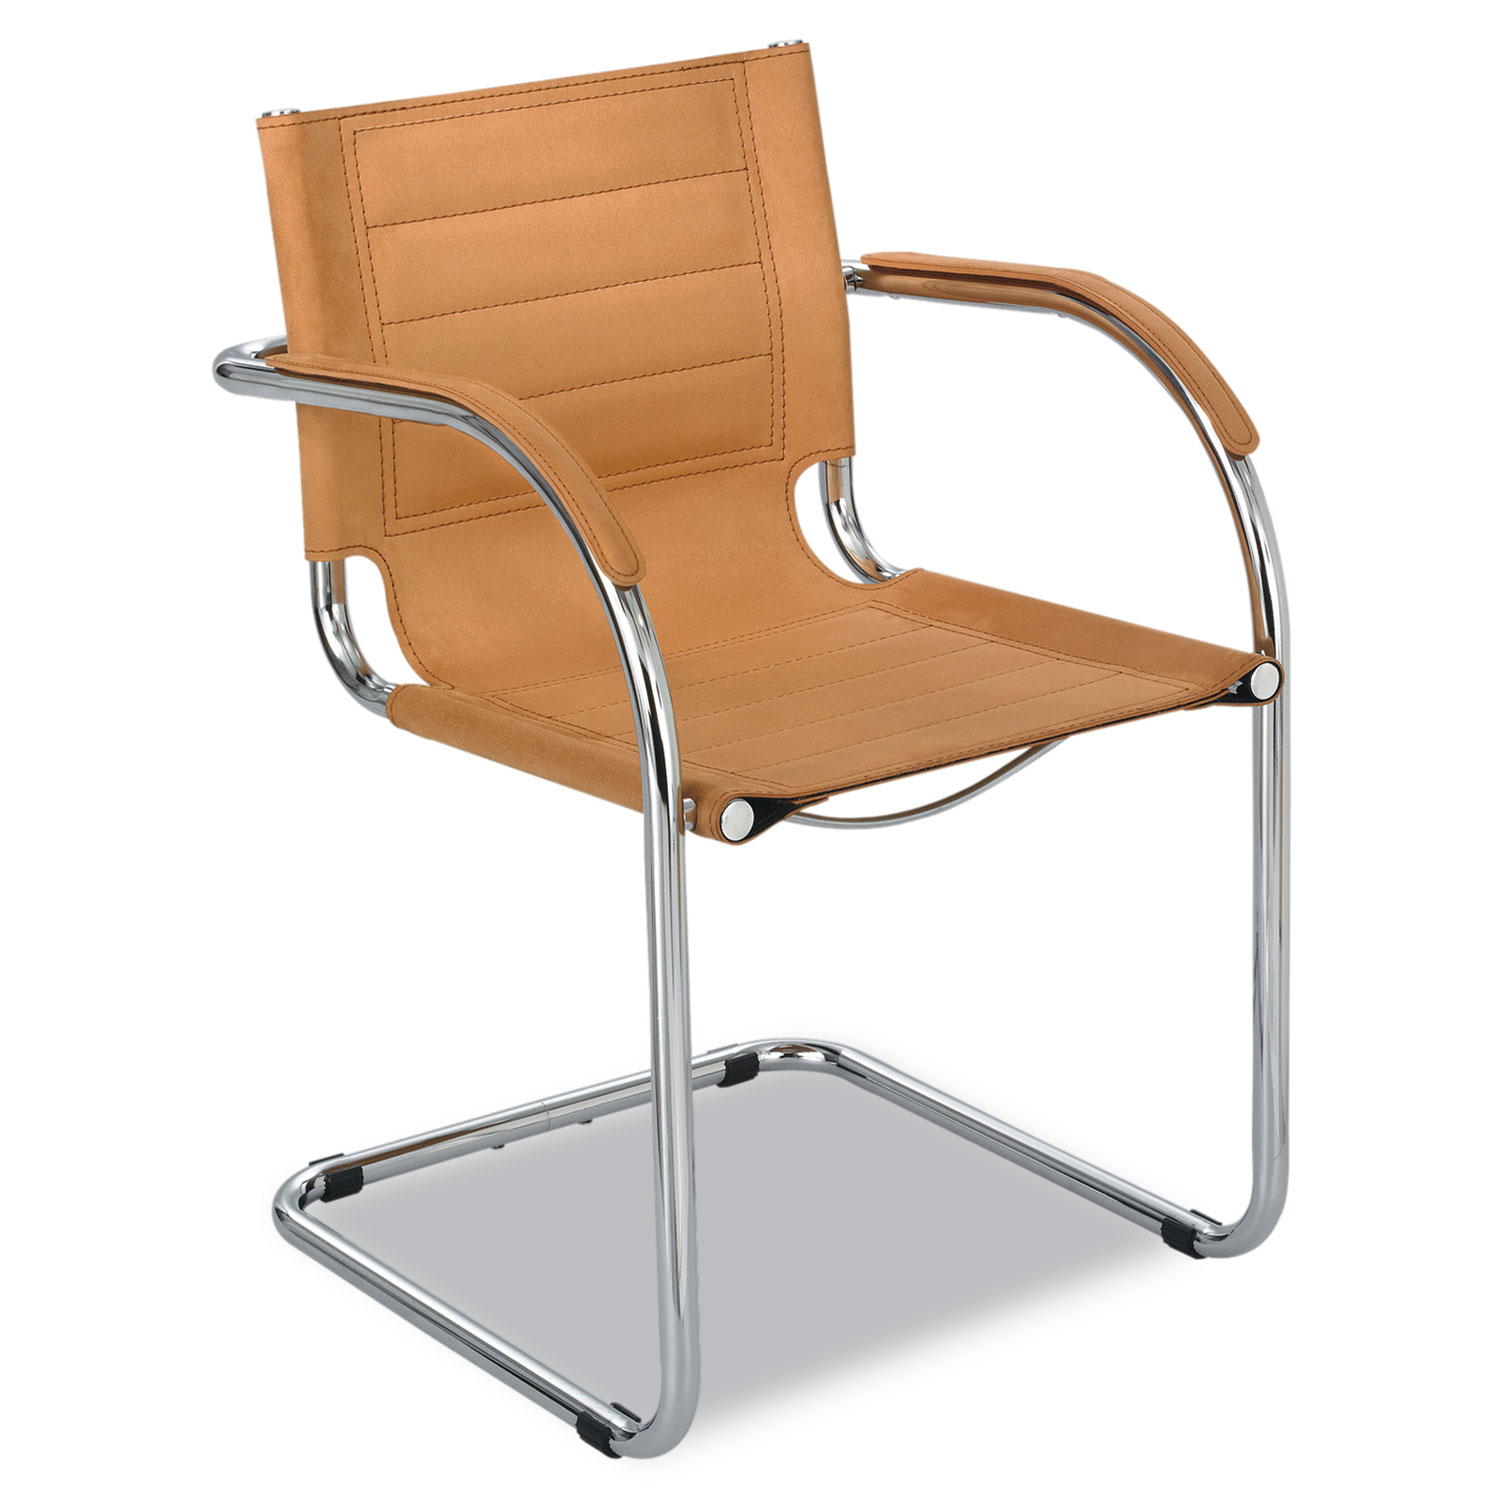  Safco 3457CM Flaunt Series Guest Chair, 21.5 x 23 x 31.75, Camel Seat/Camel Back, Chrome Base (SAF3457CM) 